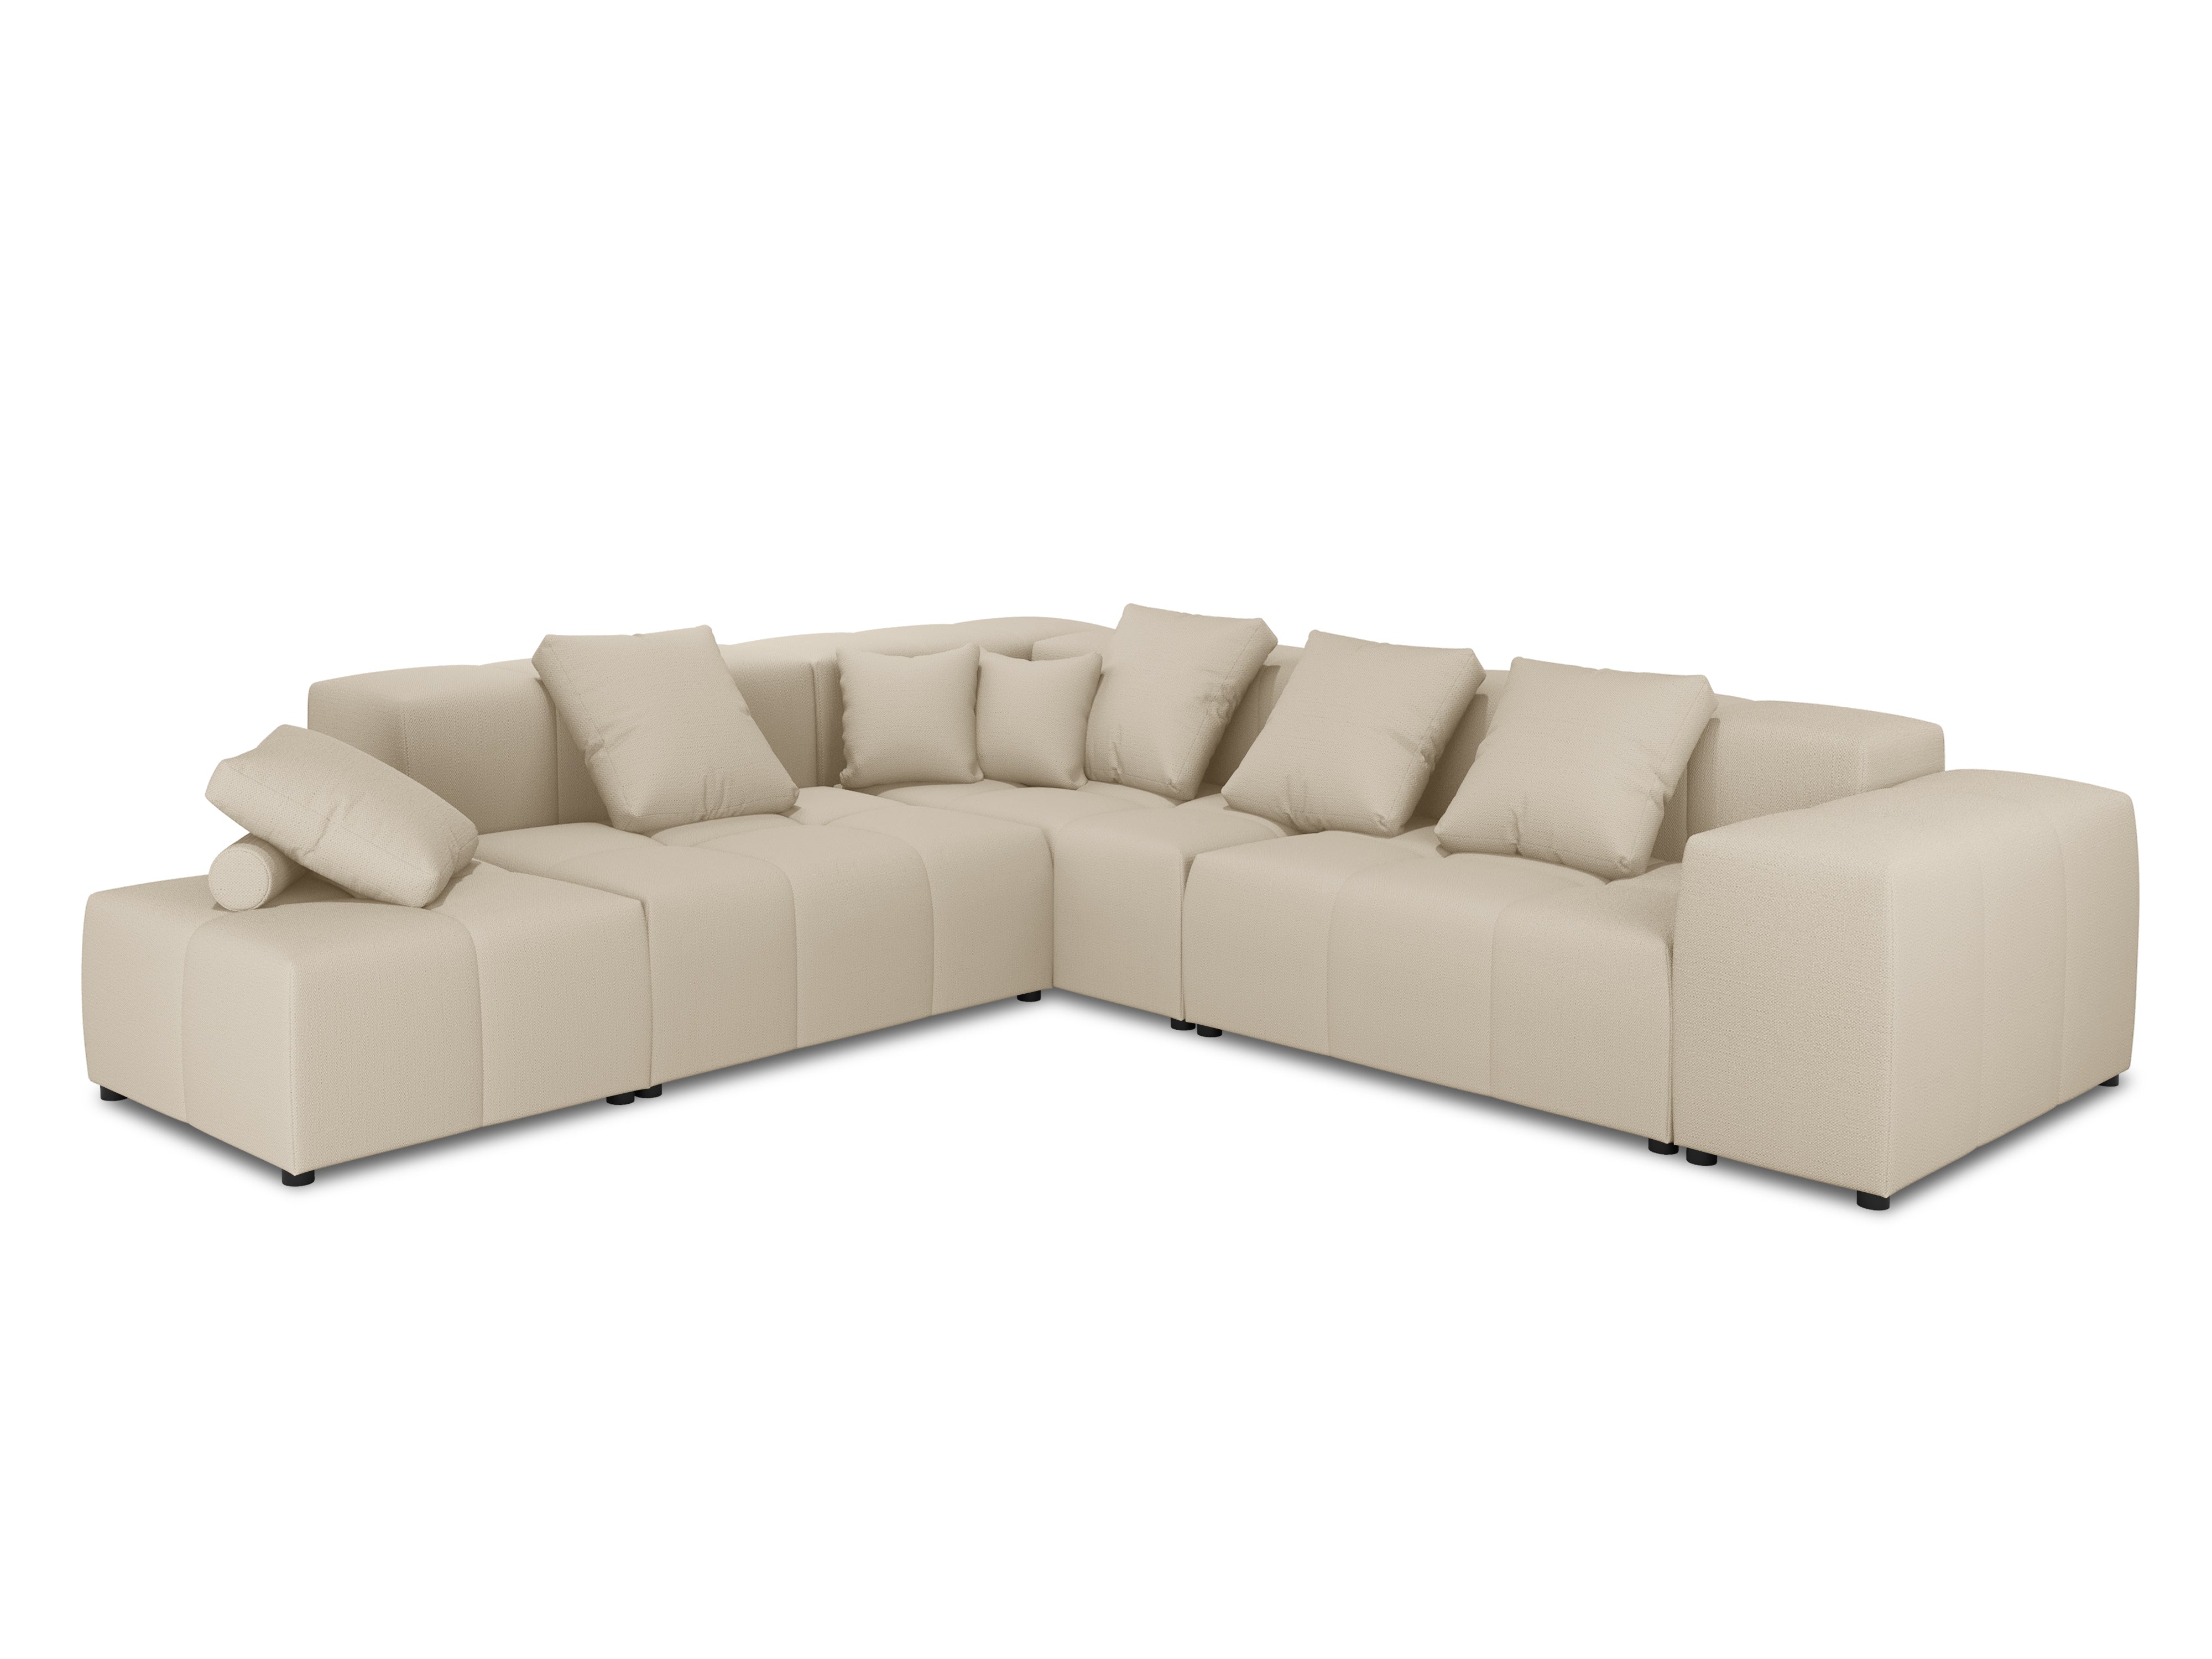 Modular large 5 seater sofa MARGO beige